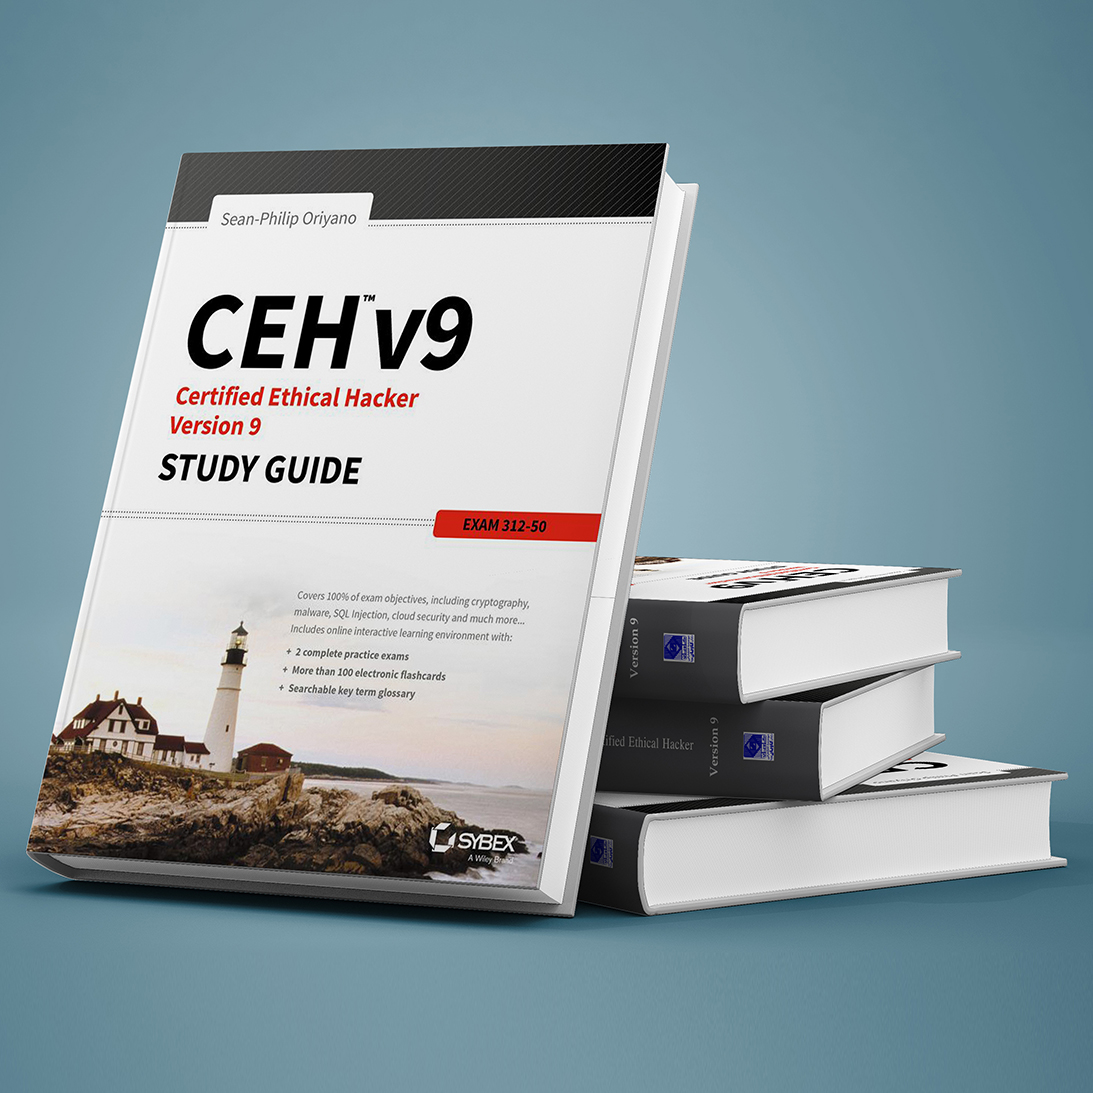 ceh v9 study guide pdf download